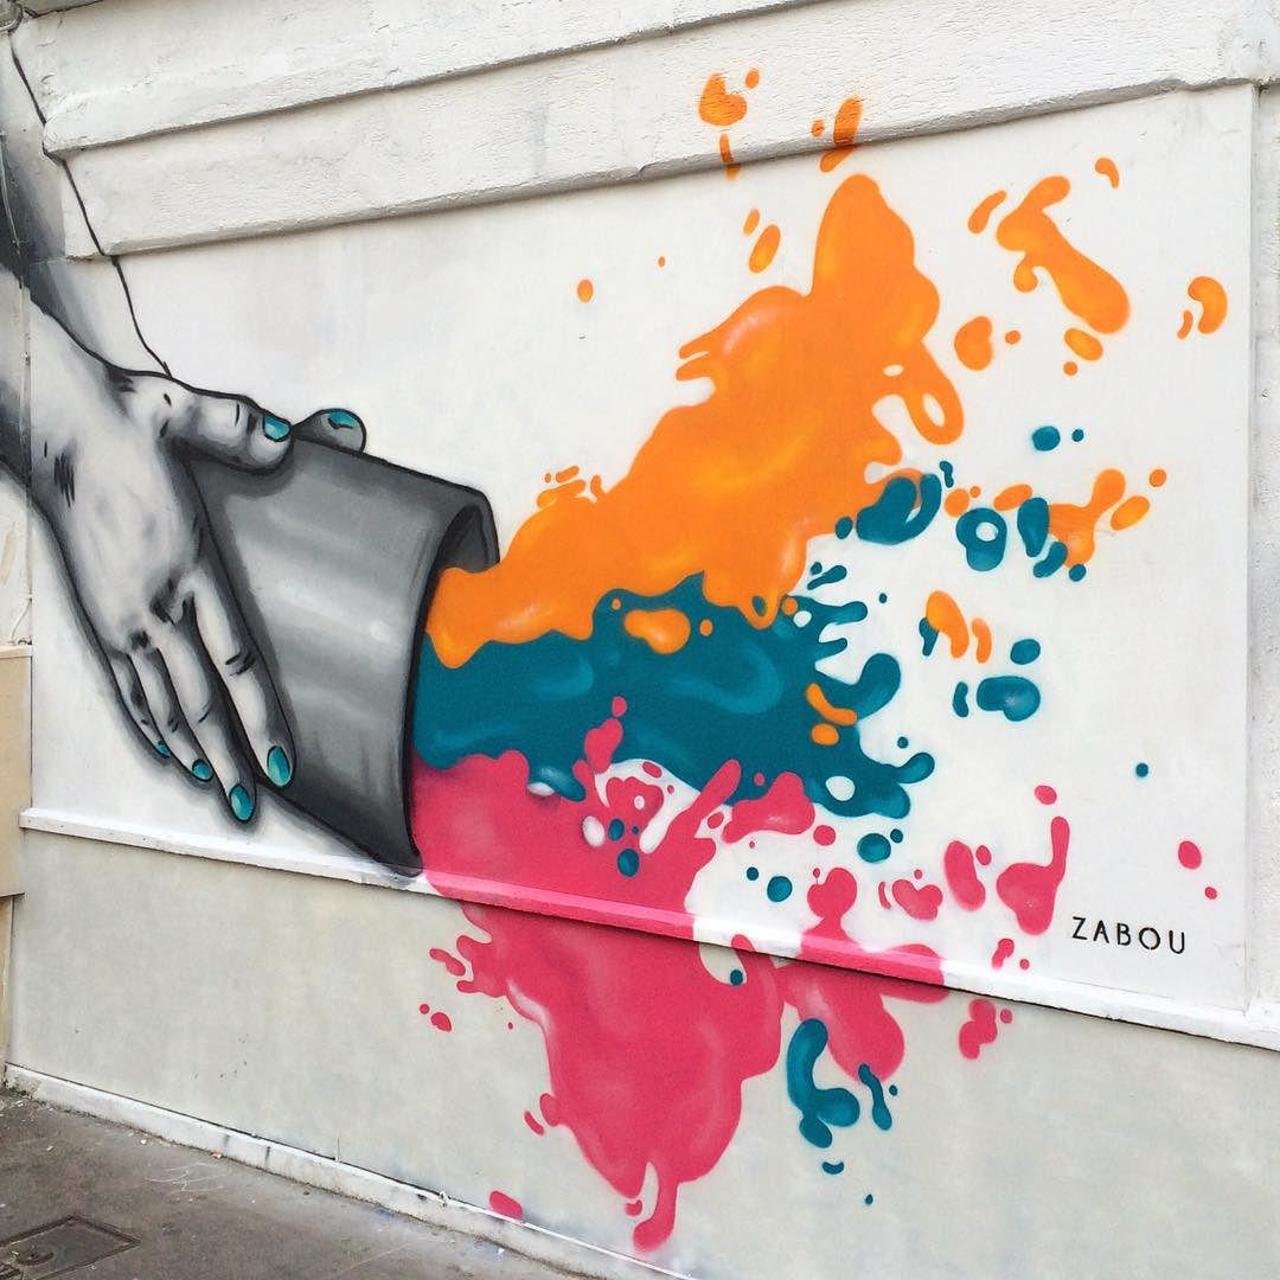 #Paris #graffiti photo by @benapix http://ift.tt/1PclxRh #StreetArt http://t.co/4zzFnzaND9